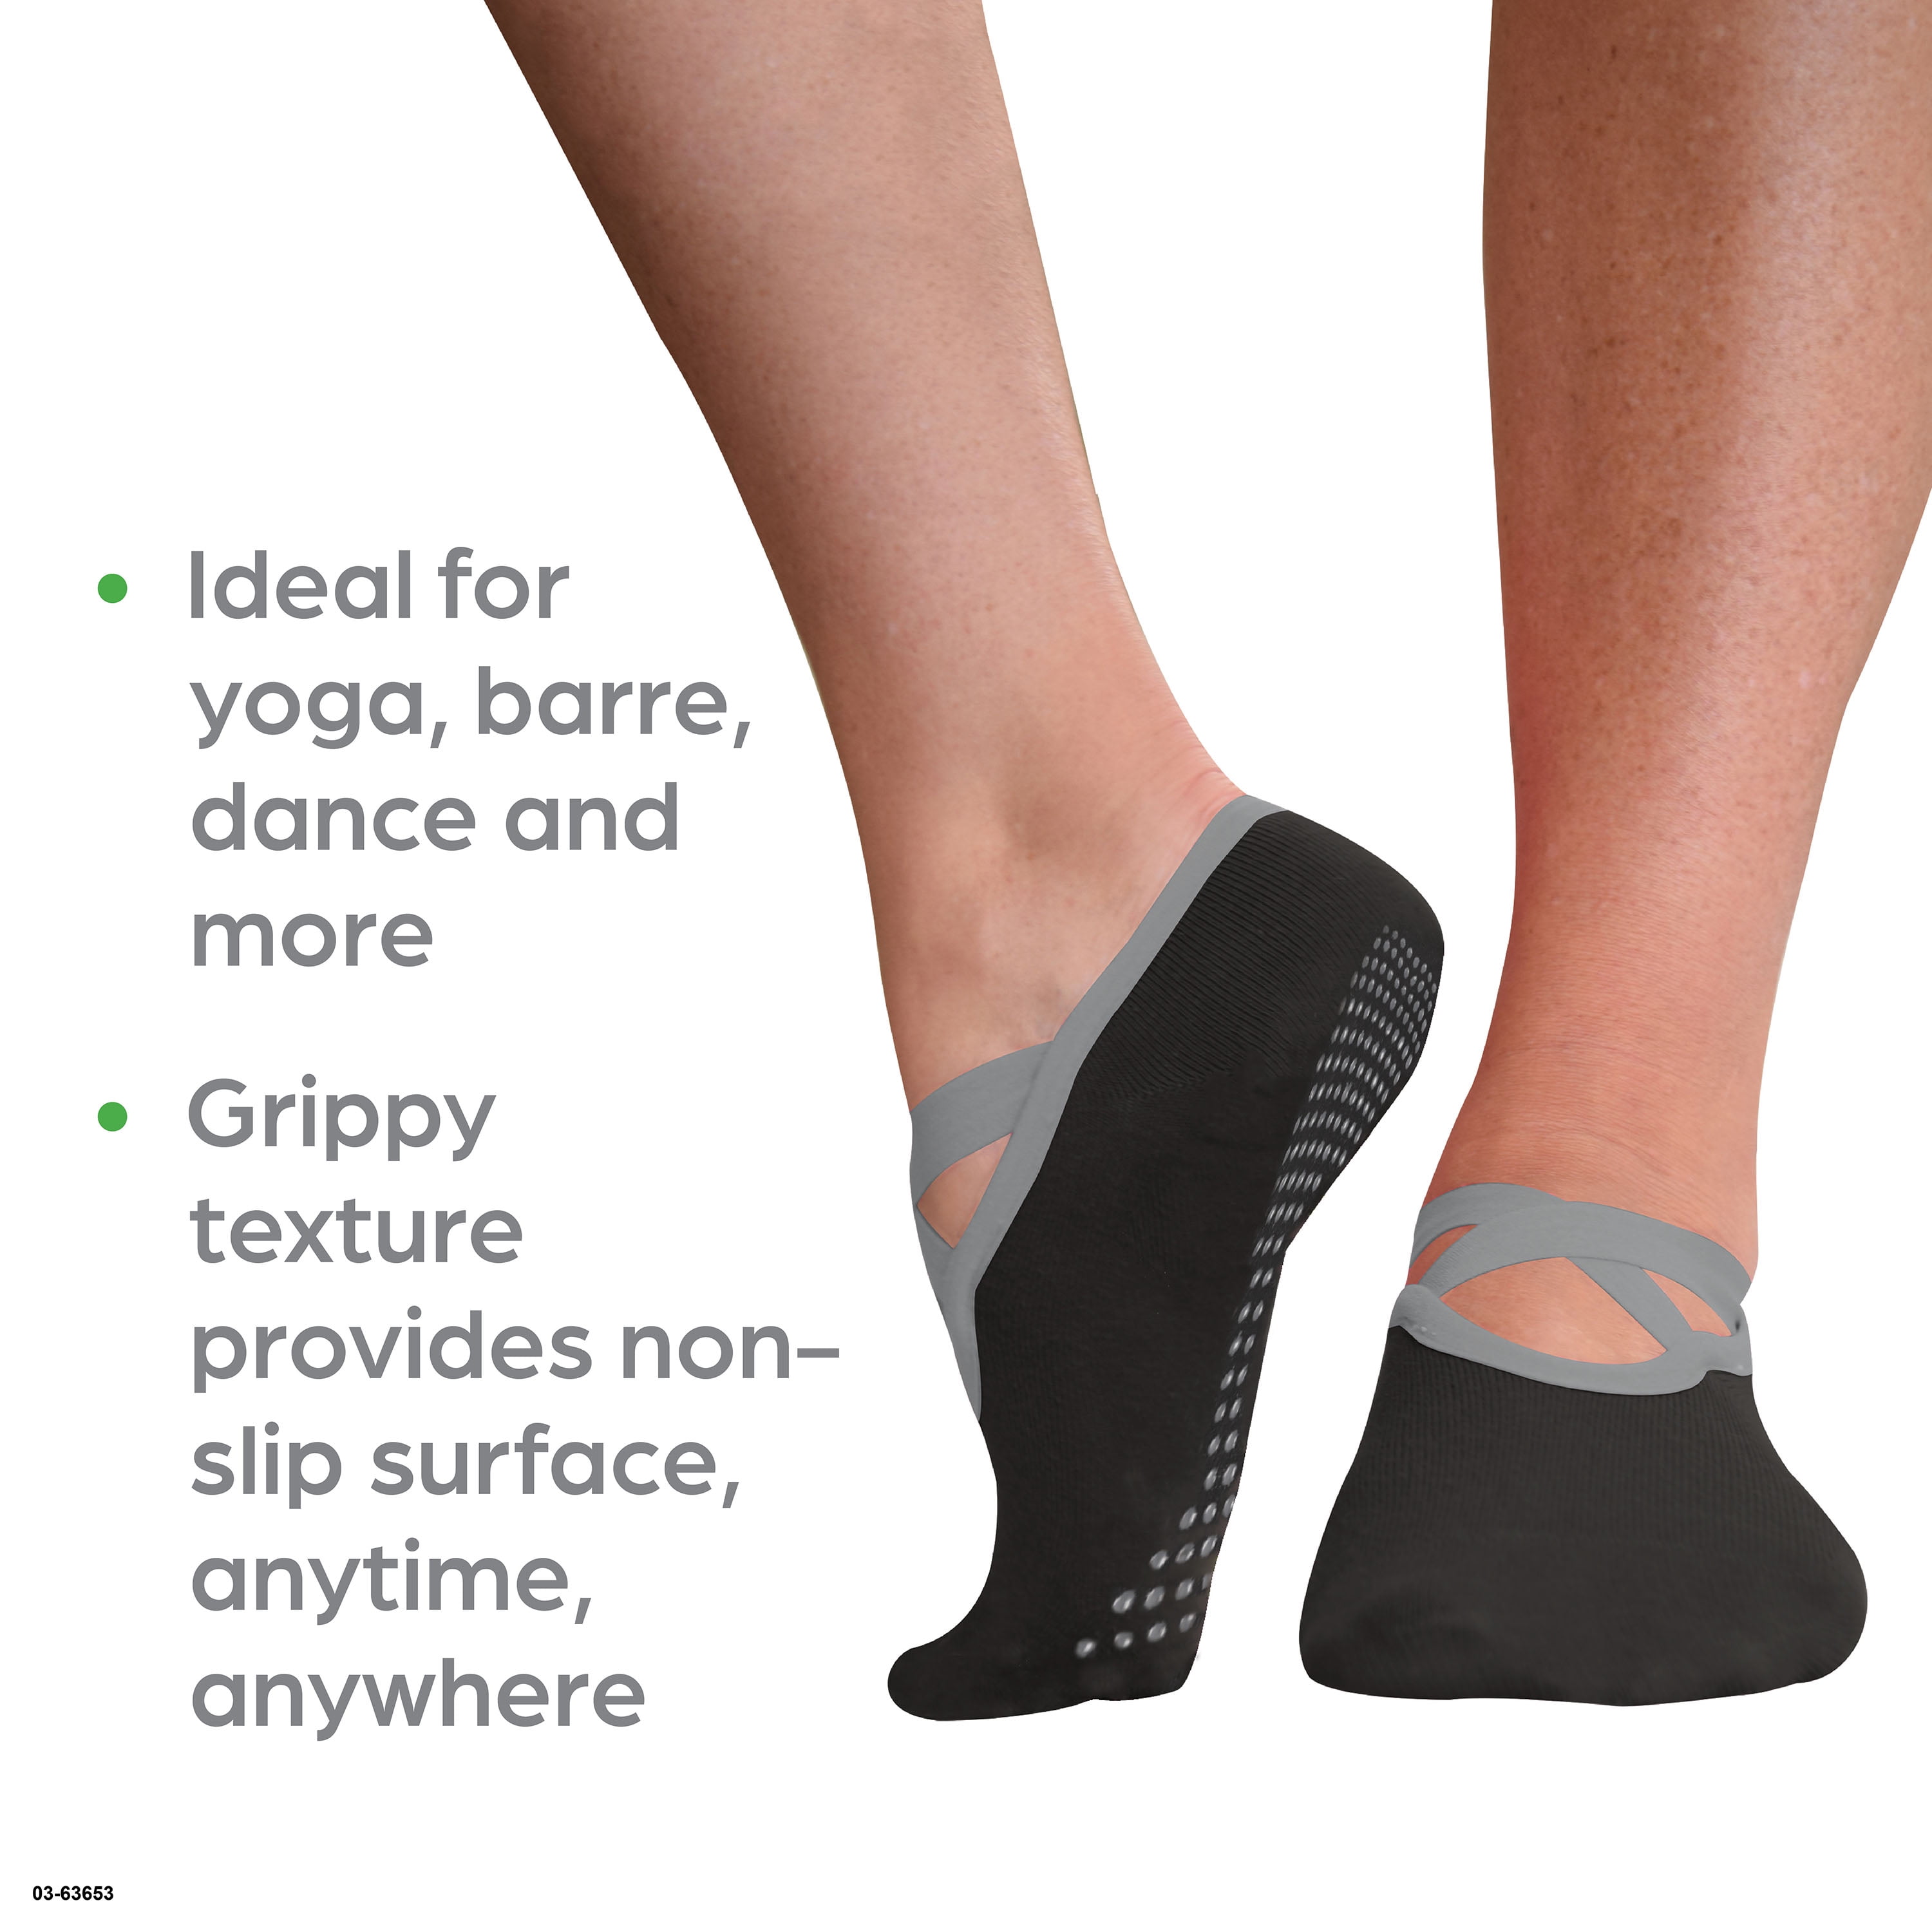 Barre Star™ Yoga Grip Socks - Non-Slip Socks for Barre, Yoga